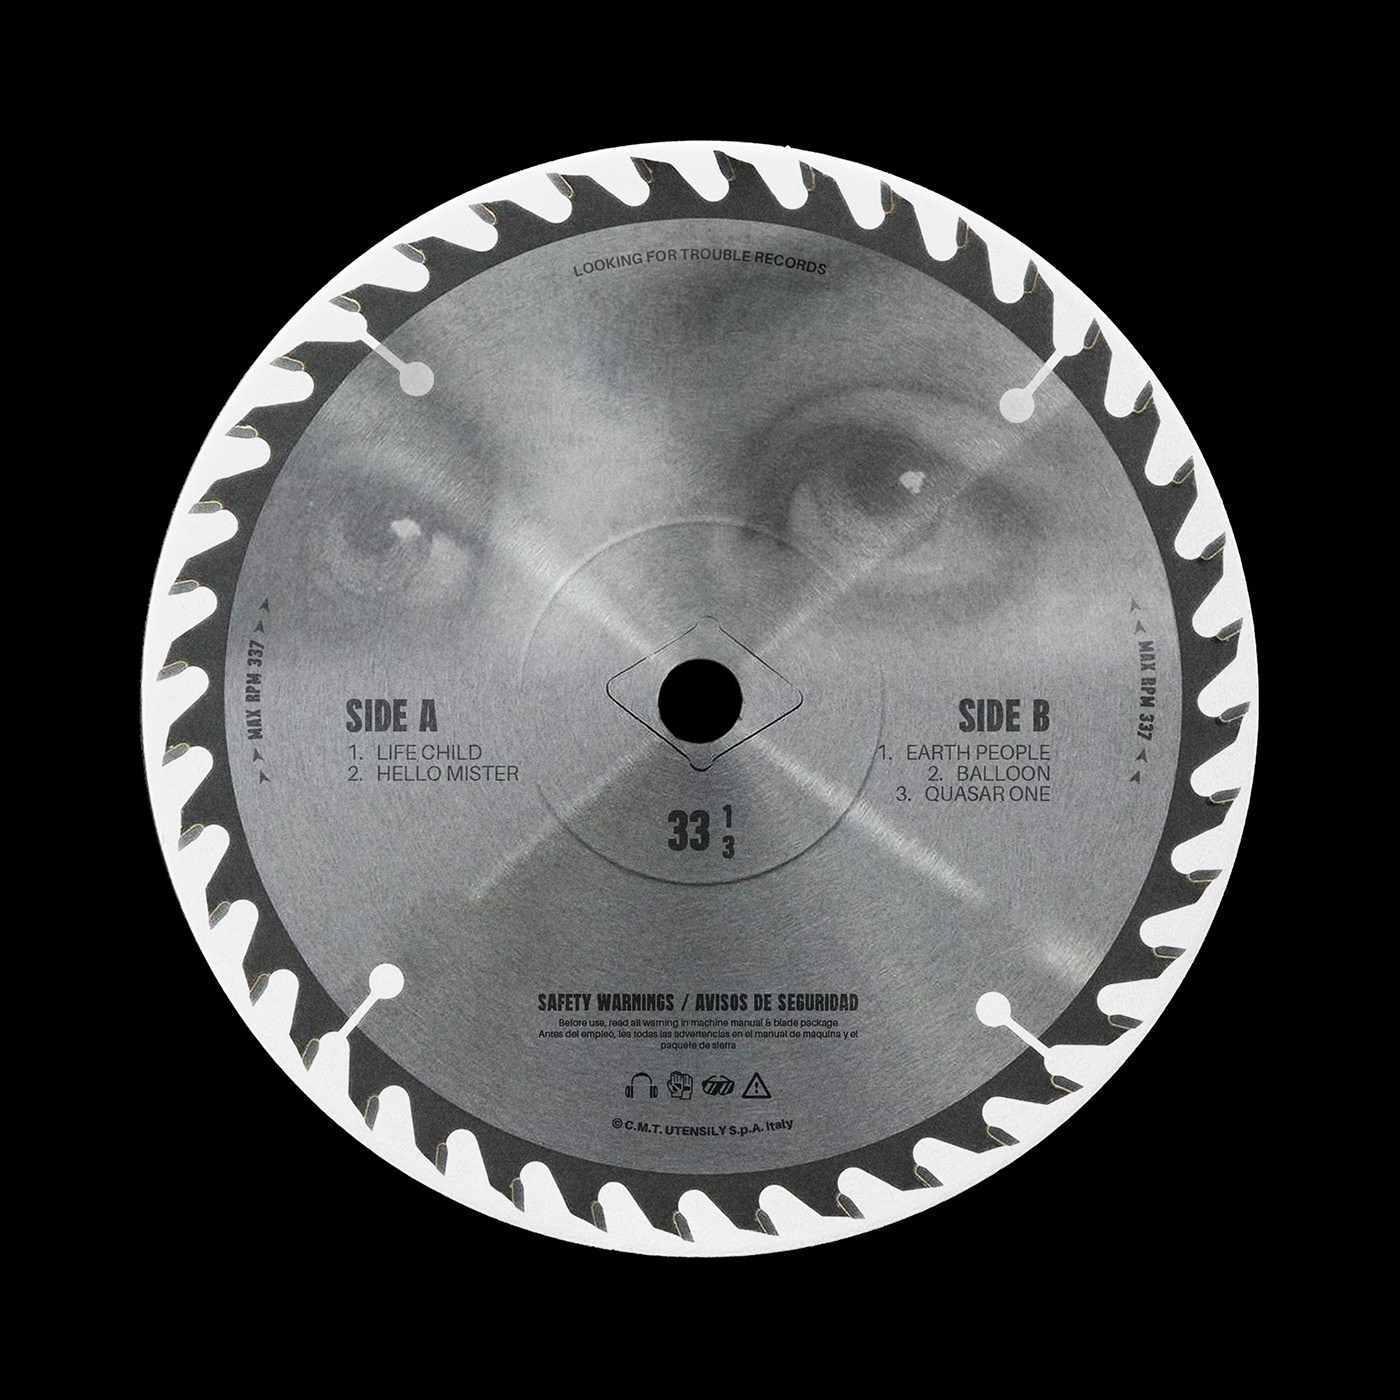 Vinyl Cover vinyl graphic design  music musica vinilo electronica diseño design dj